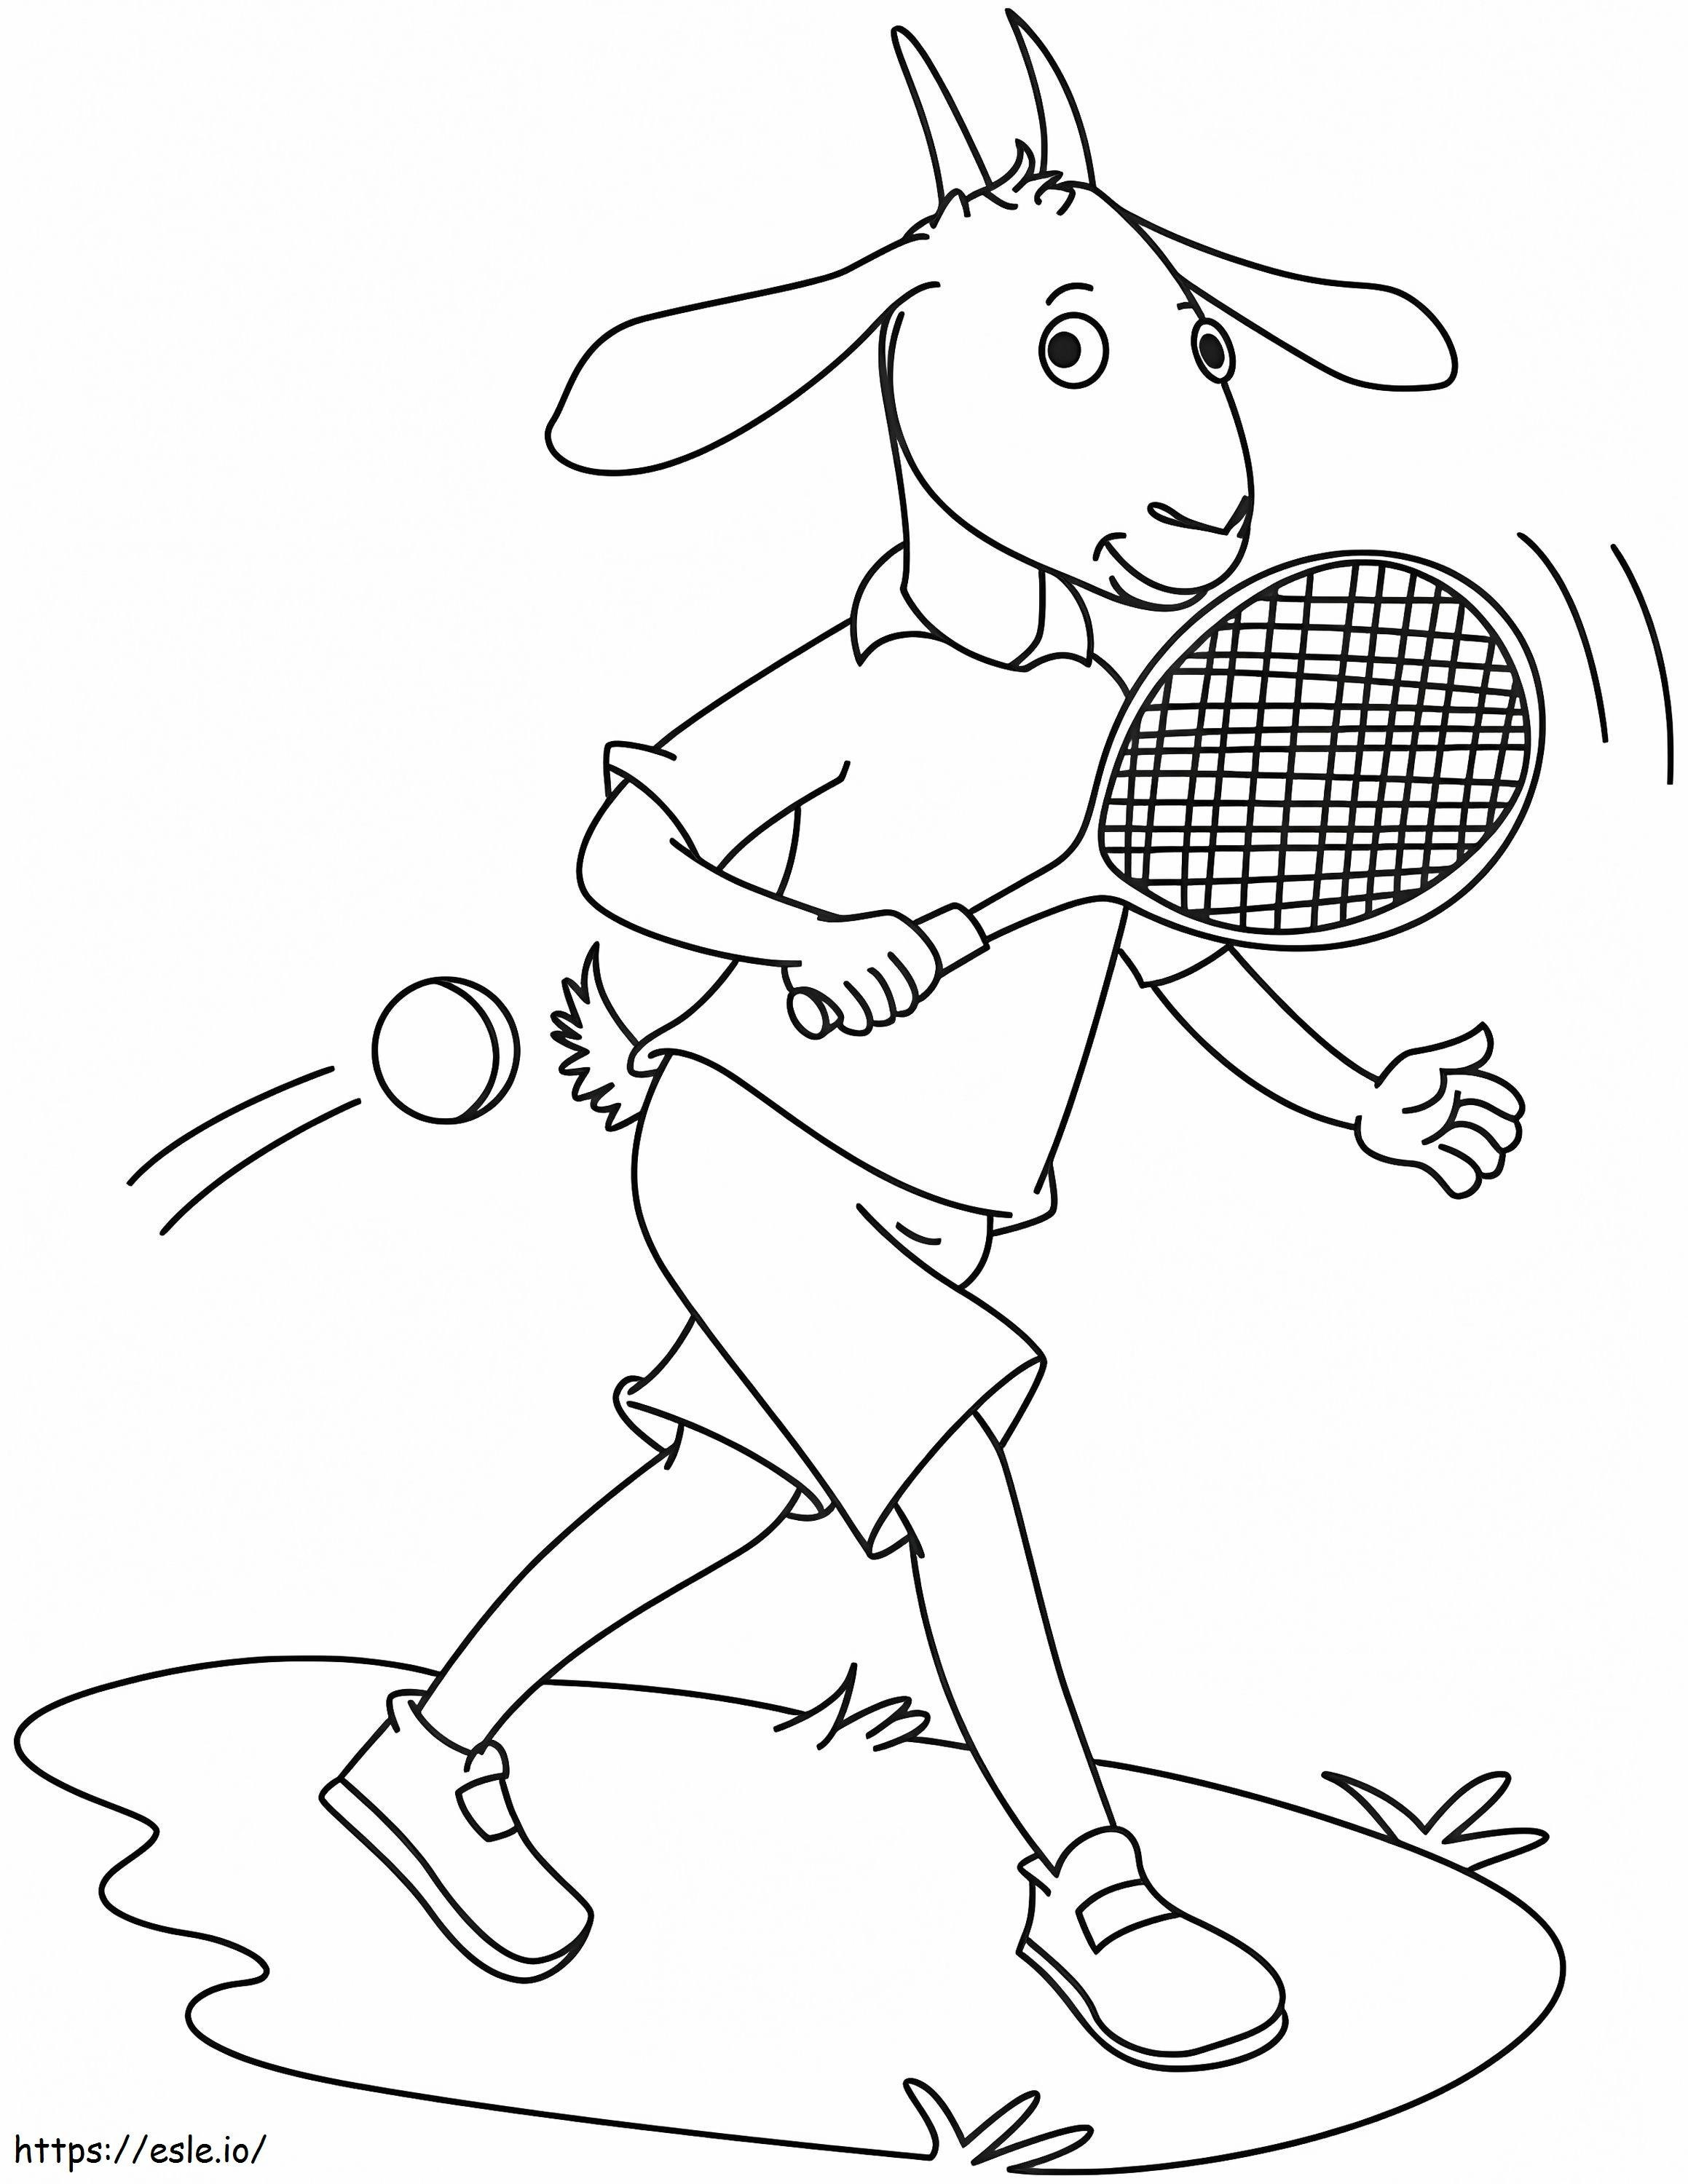 1542094131 Cabra jogando tênis para colorir